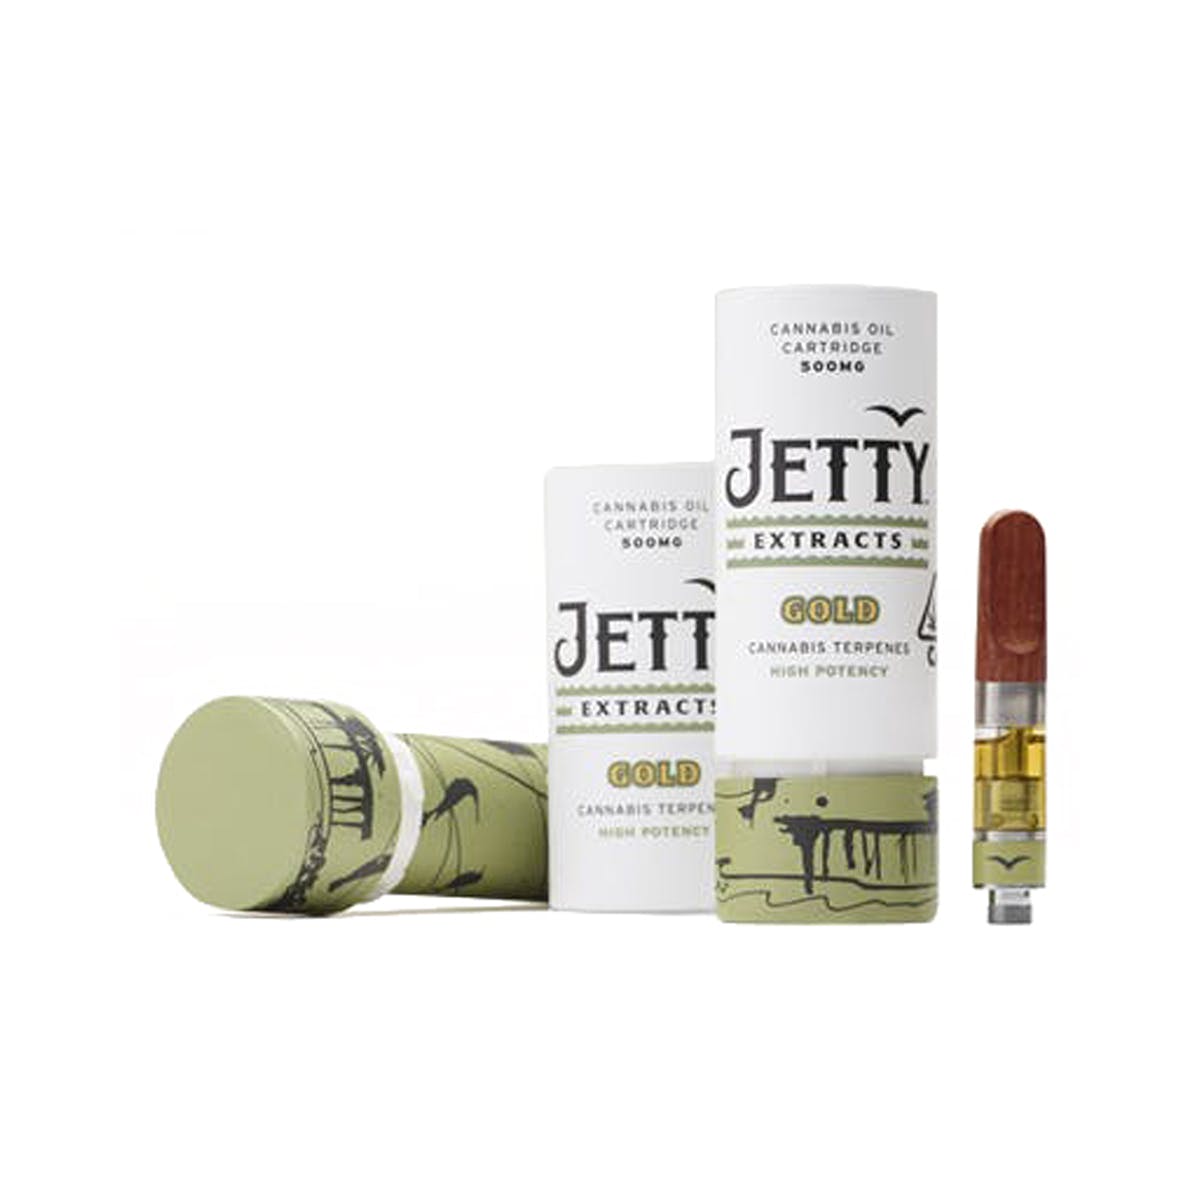 Jetty Gold Cartridge, Maui Wowie